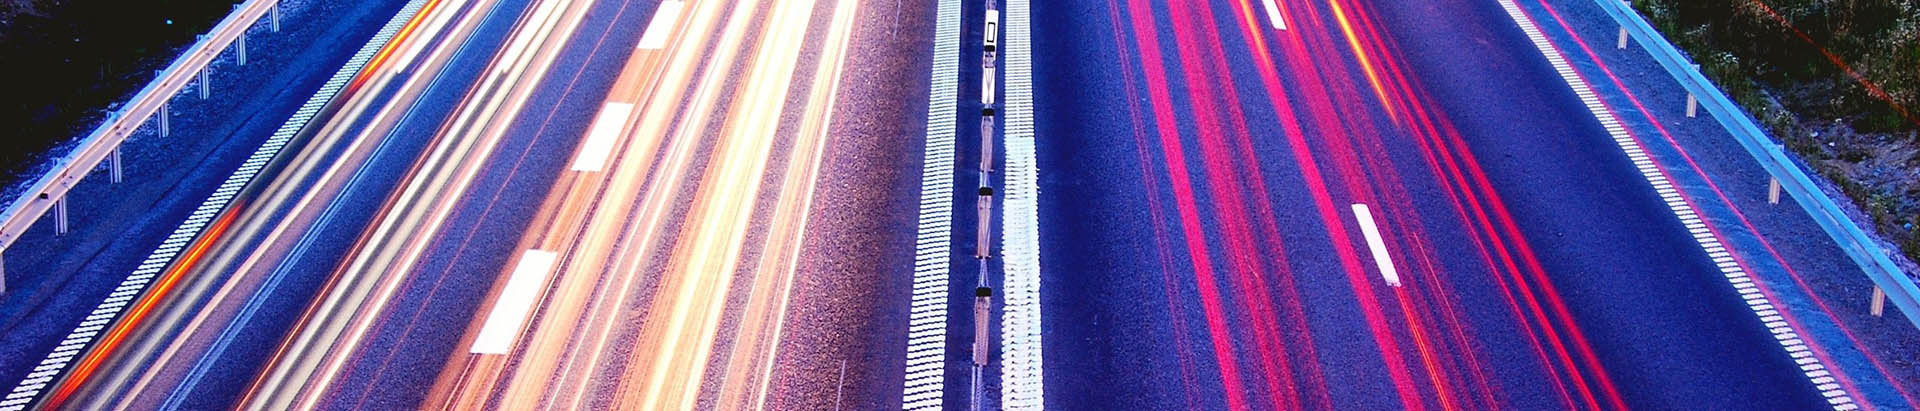 asphalt-blur-cars-commuting-399636